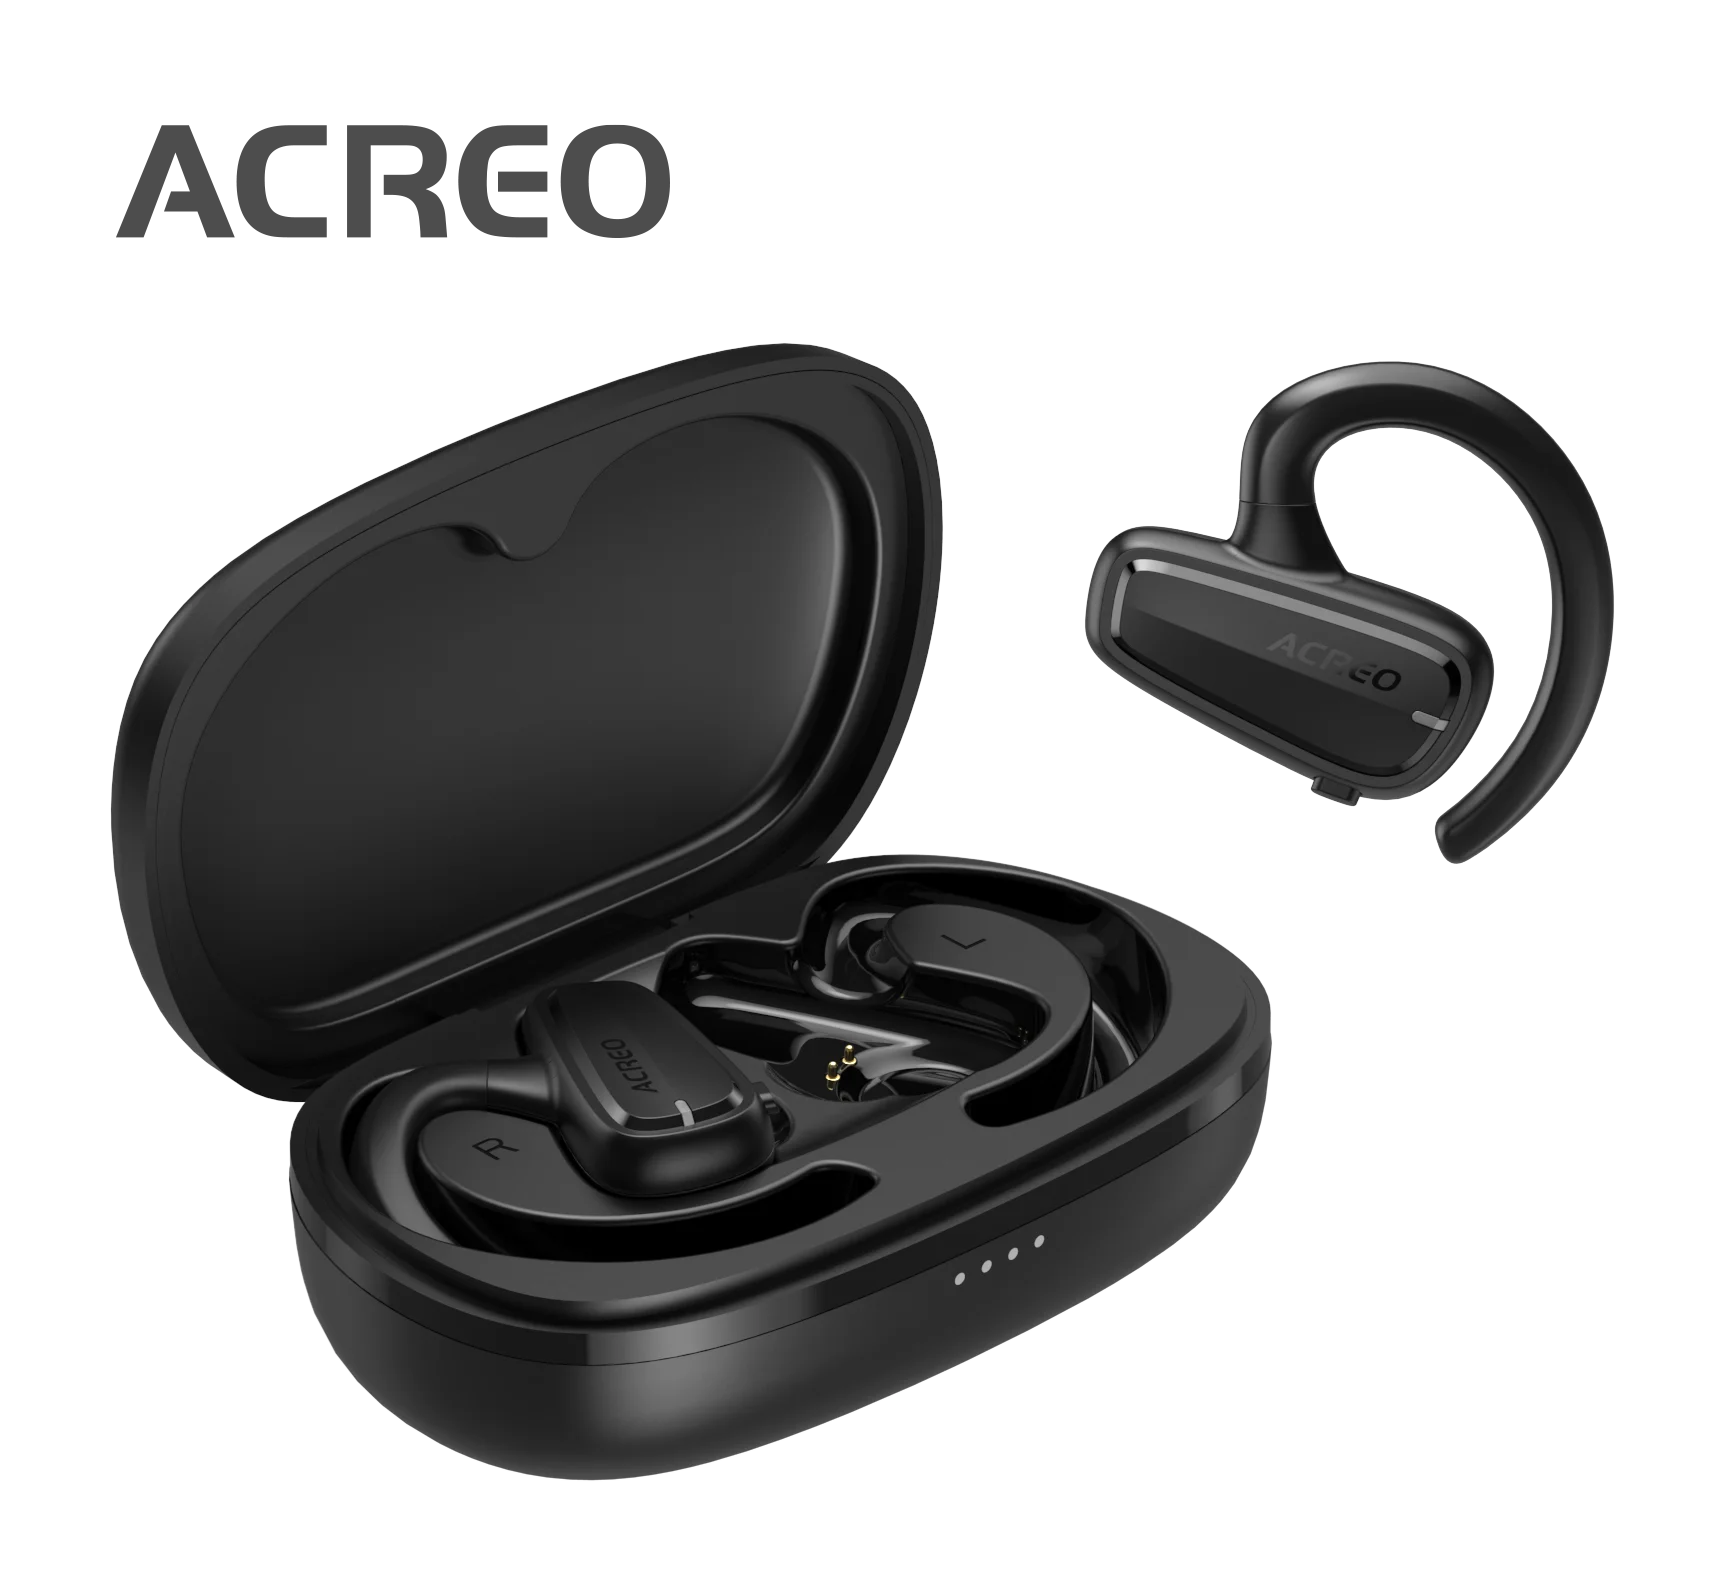 ACREO Open Ear TWS Bluetooth Headphones Wireless Charging Case Bass Sounds IPX5 Waterproof Sports Earphones Free Shipping